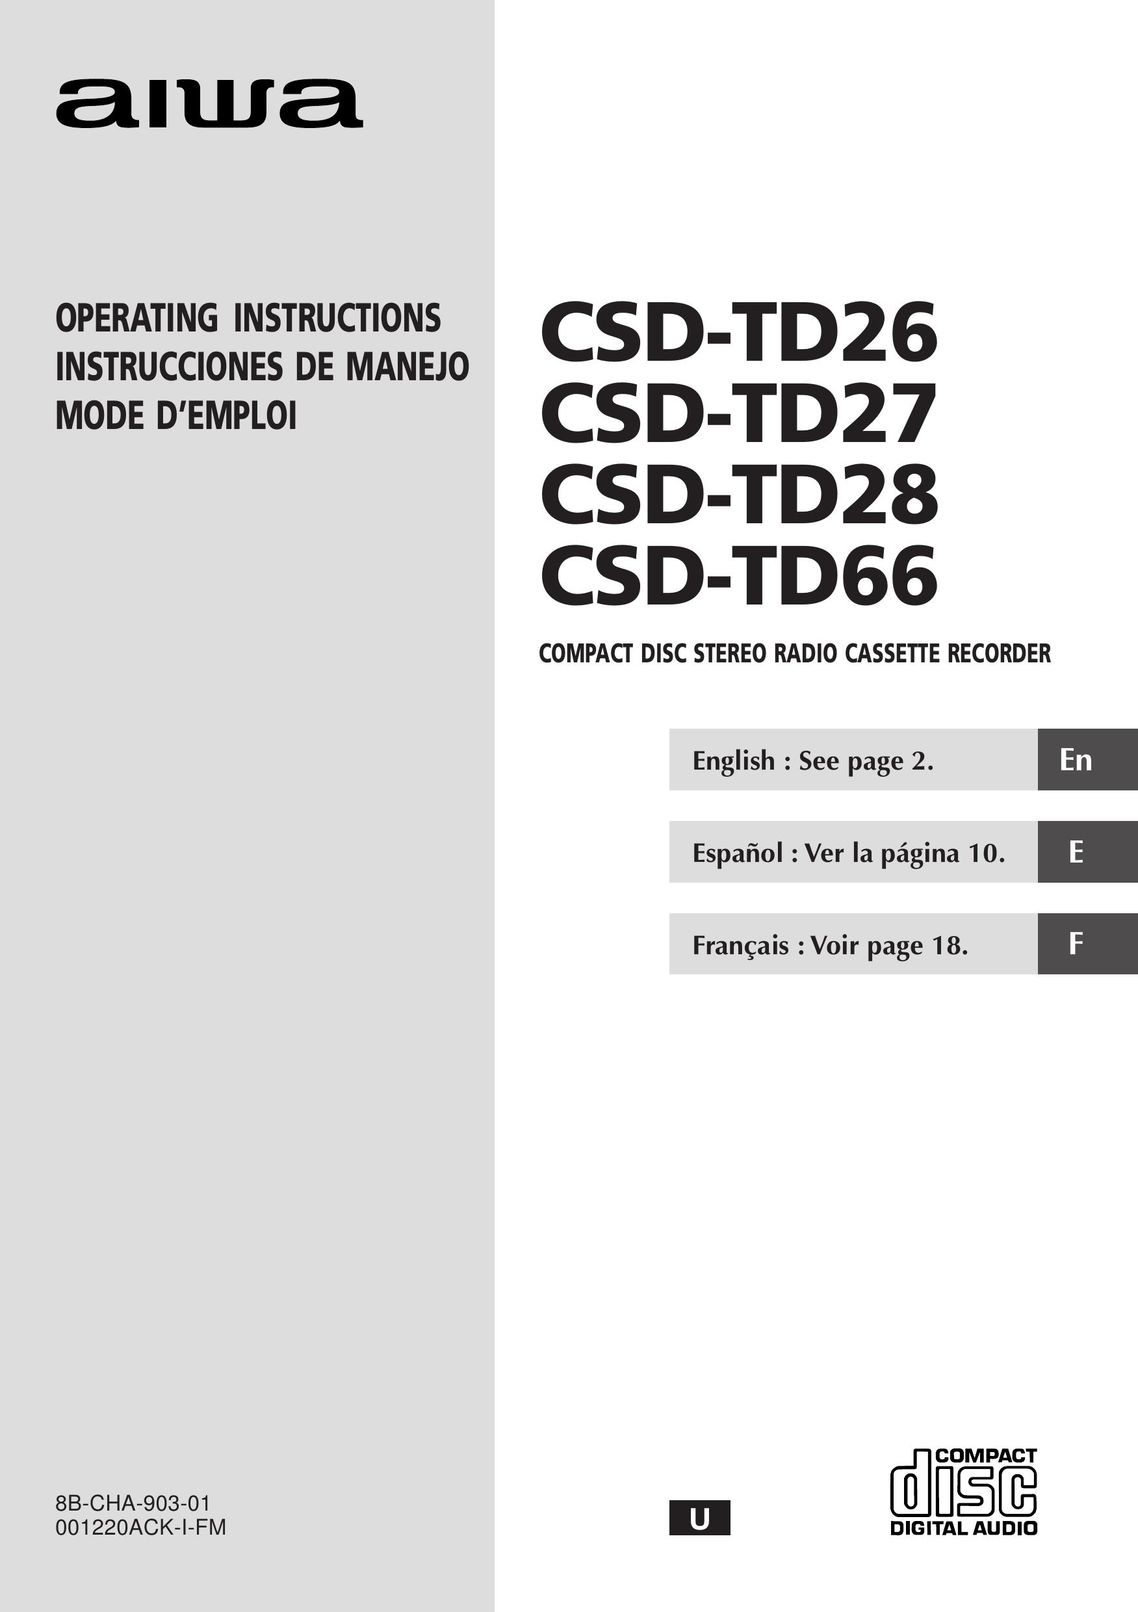 Aiwa CSD-TD66 CD Player User Manual